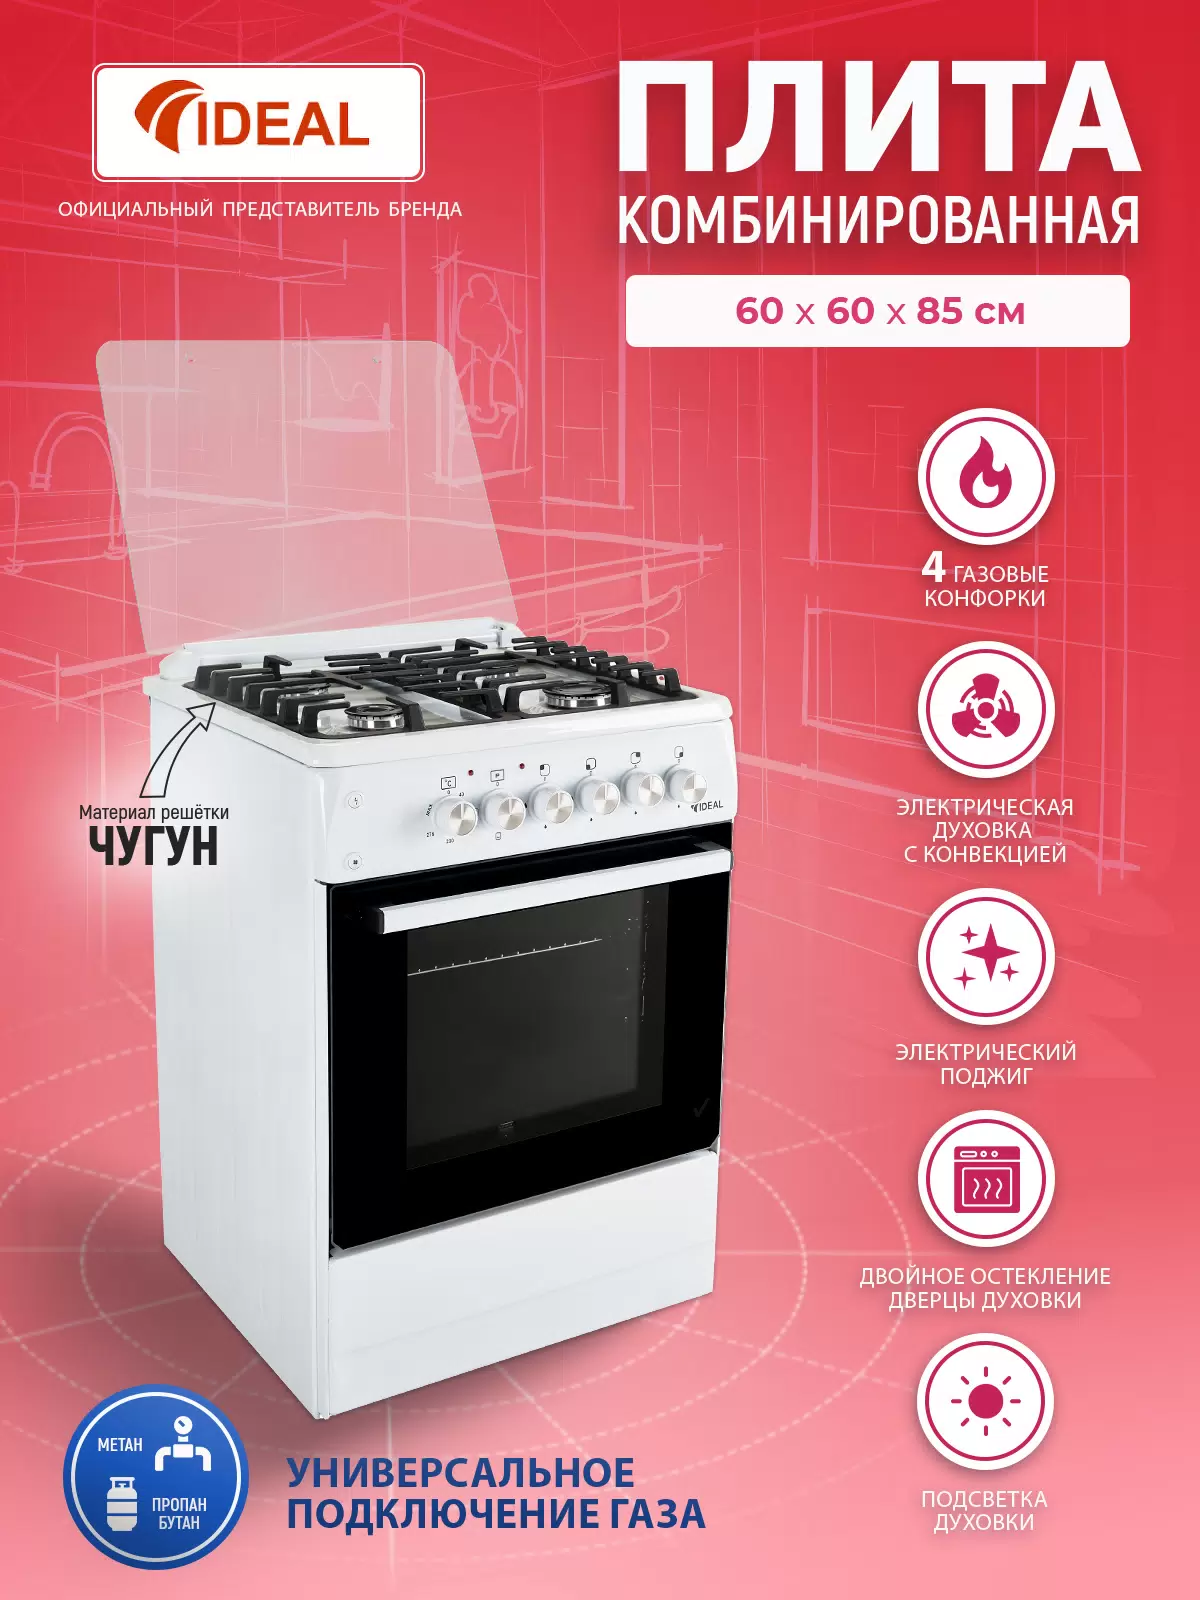 Комбинированная плита Ideal L 265 белая - VLARNIKA в Донецке